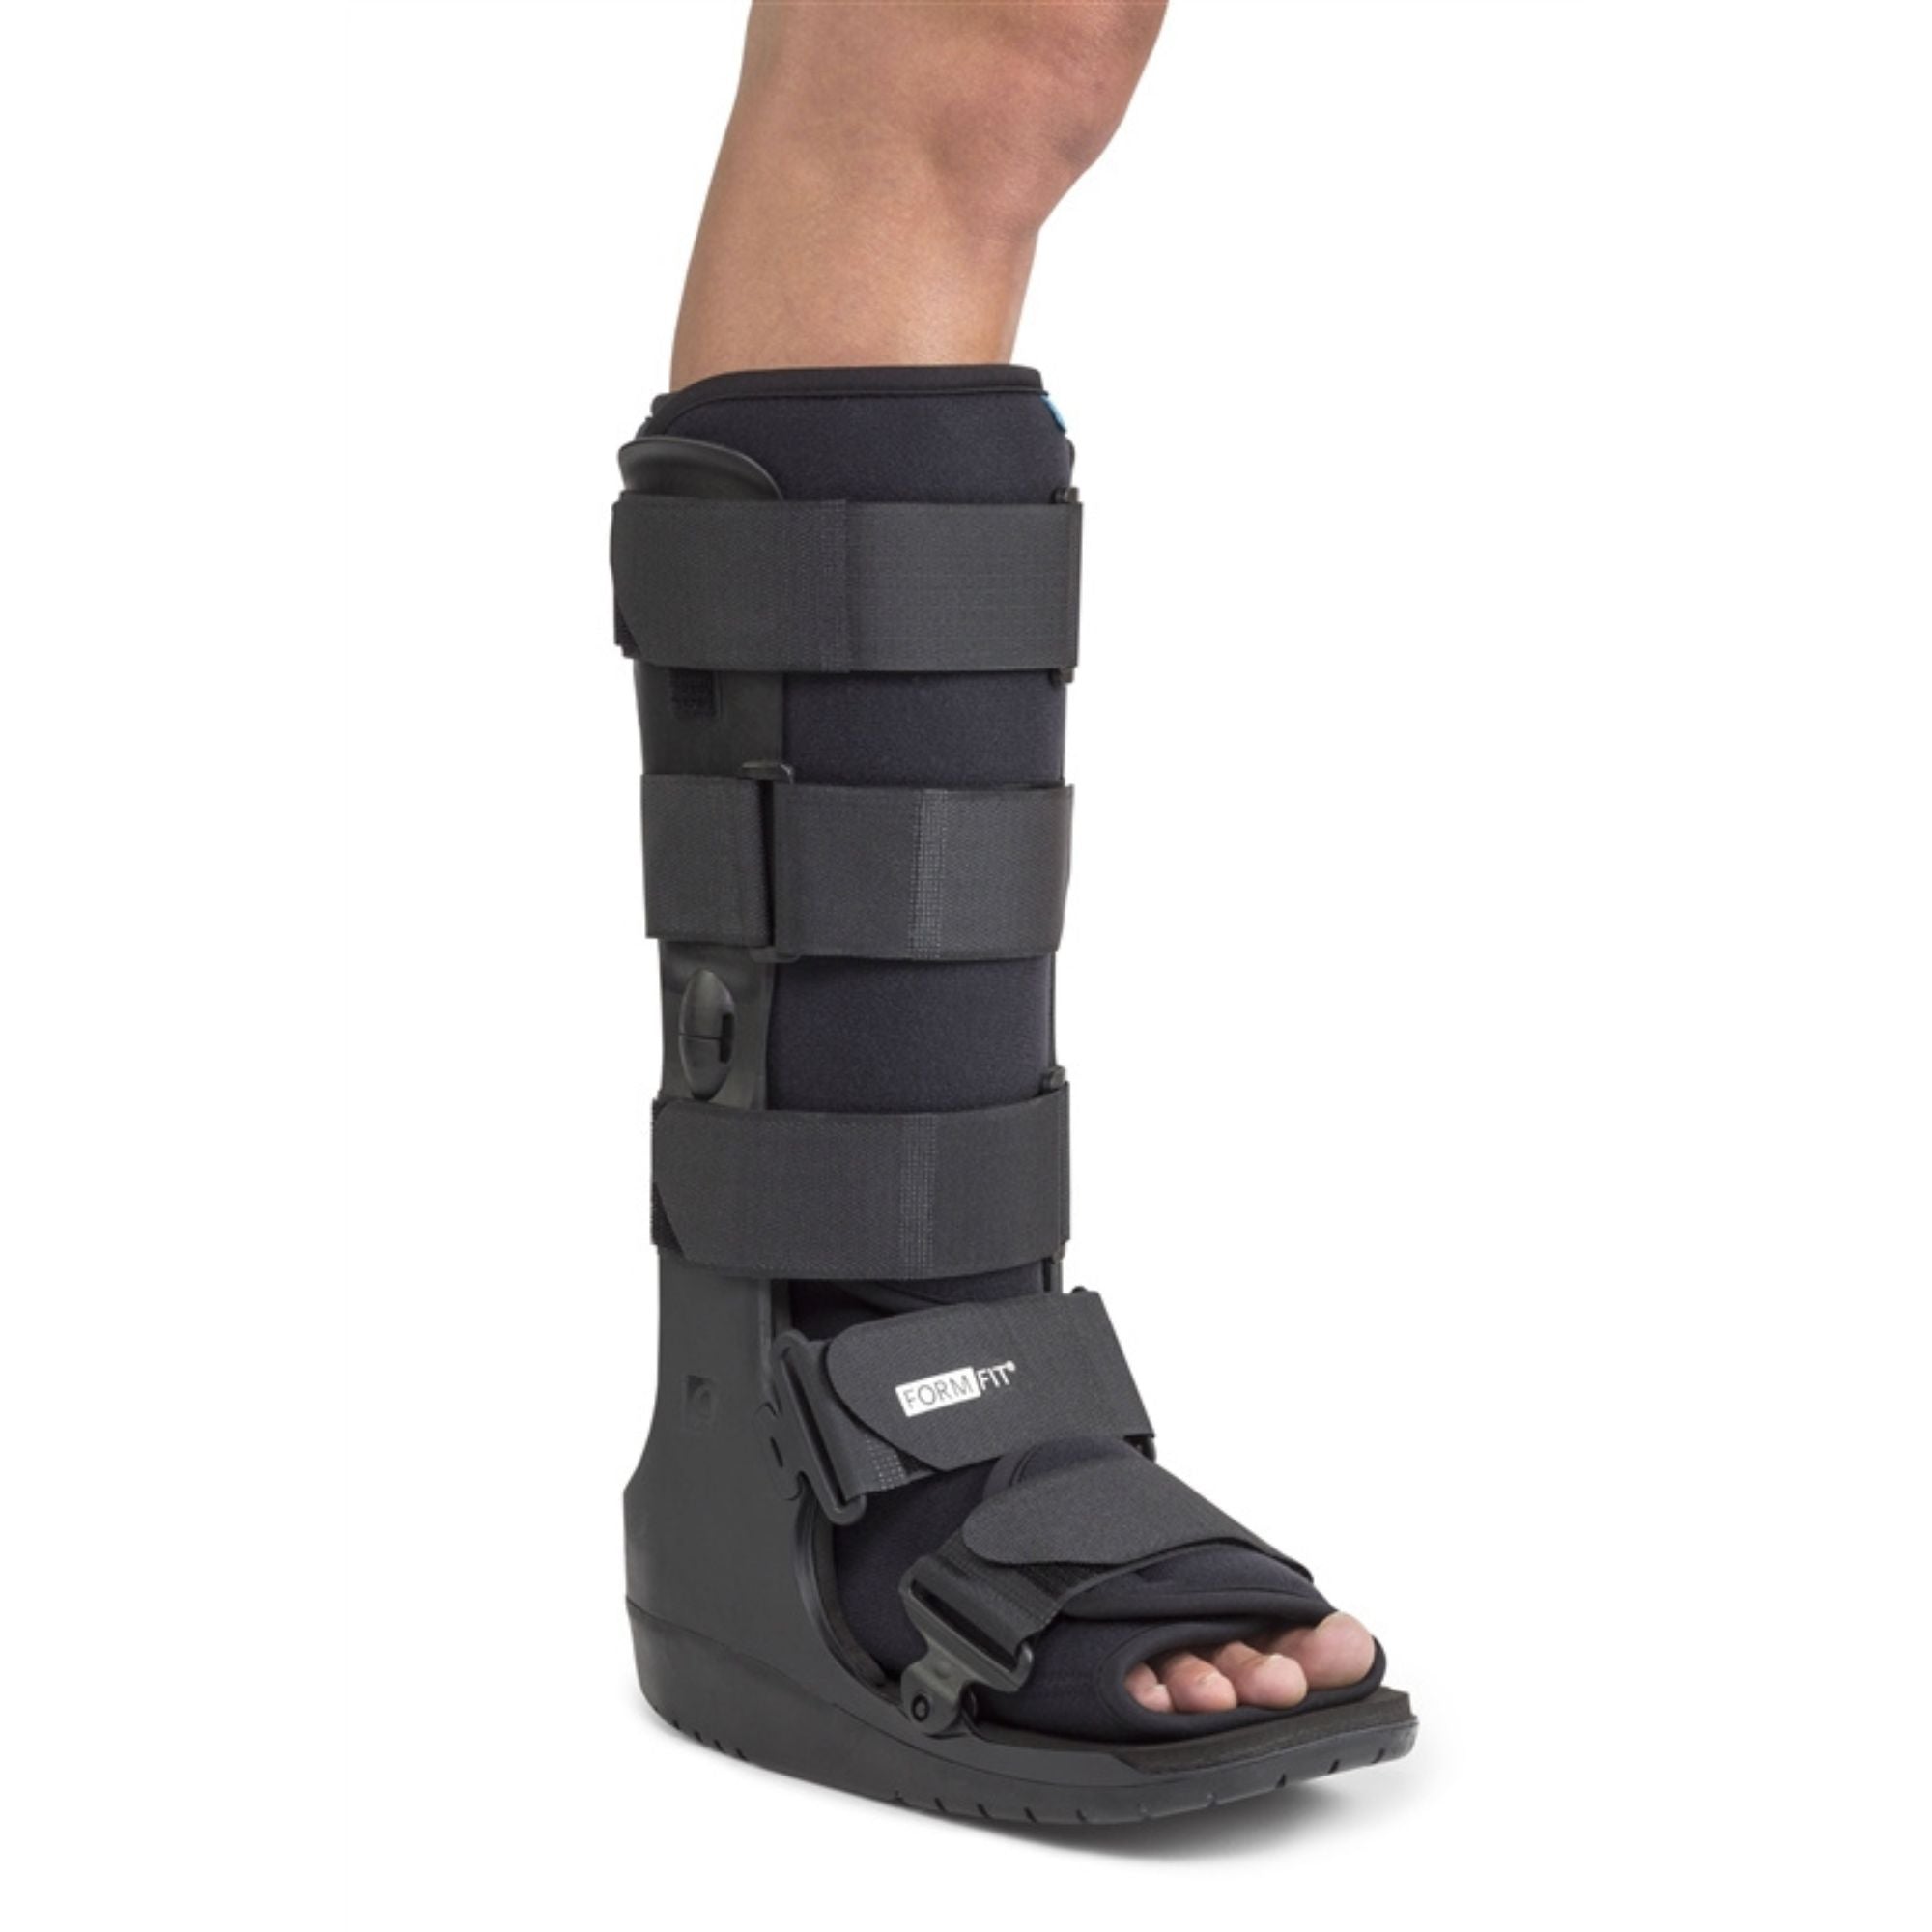 ankle walker boot